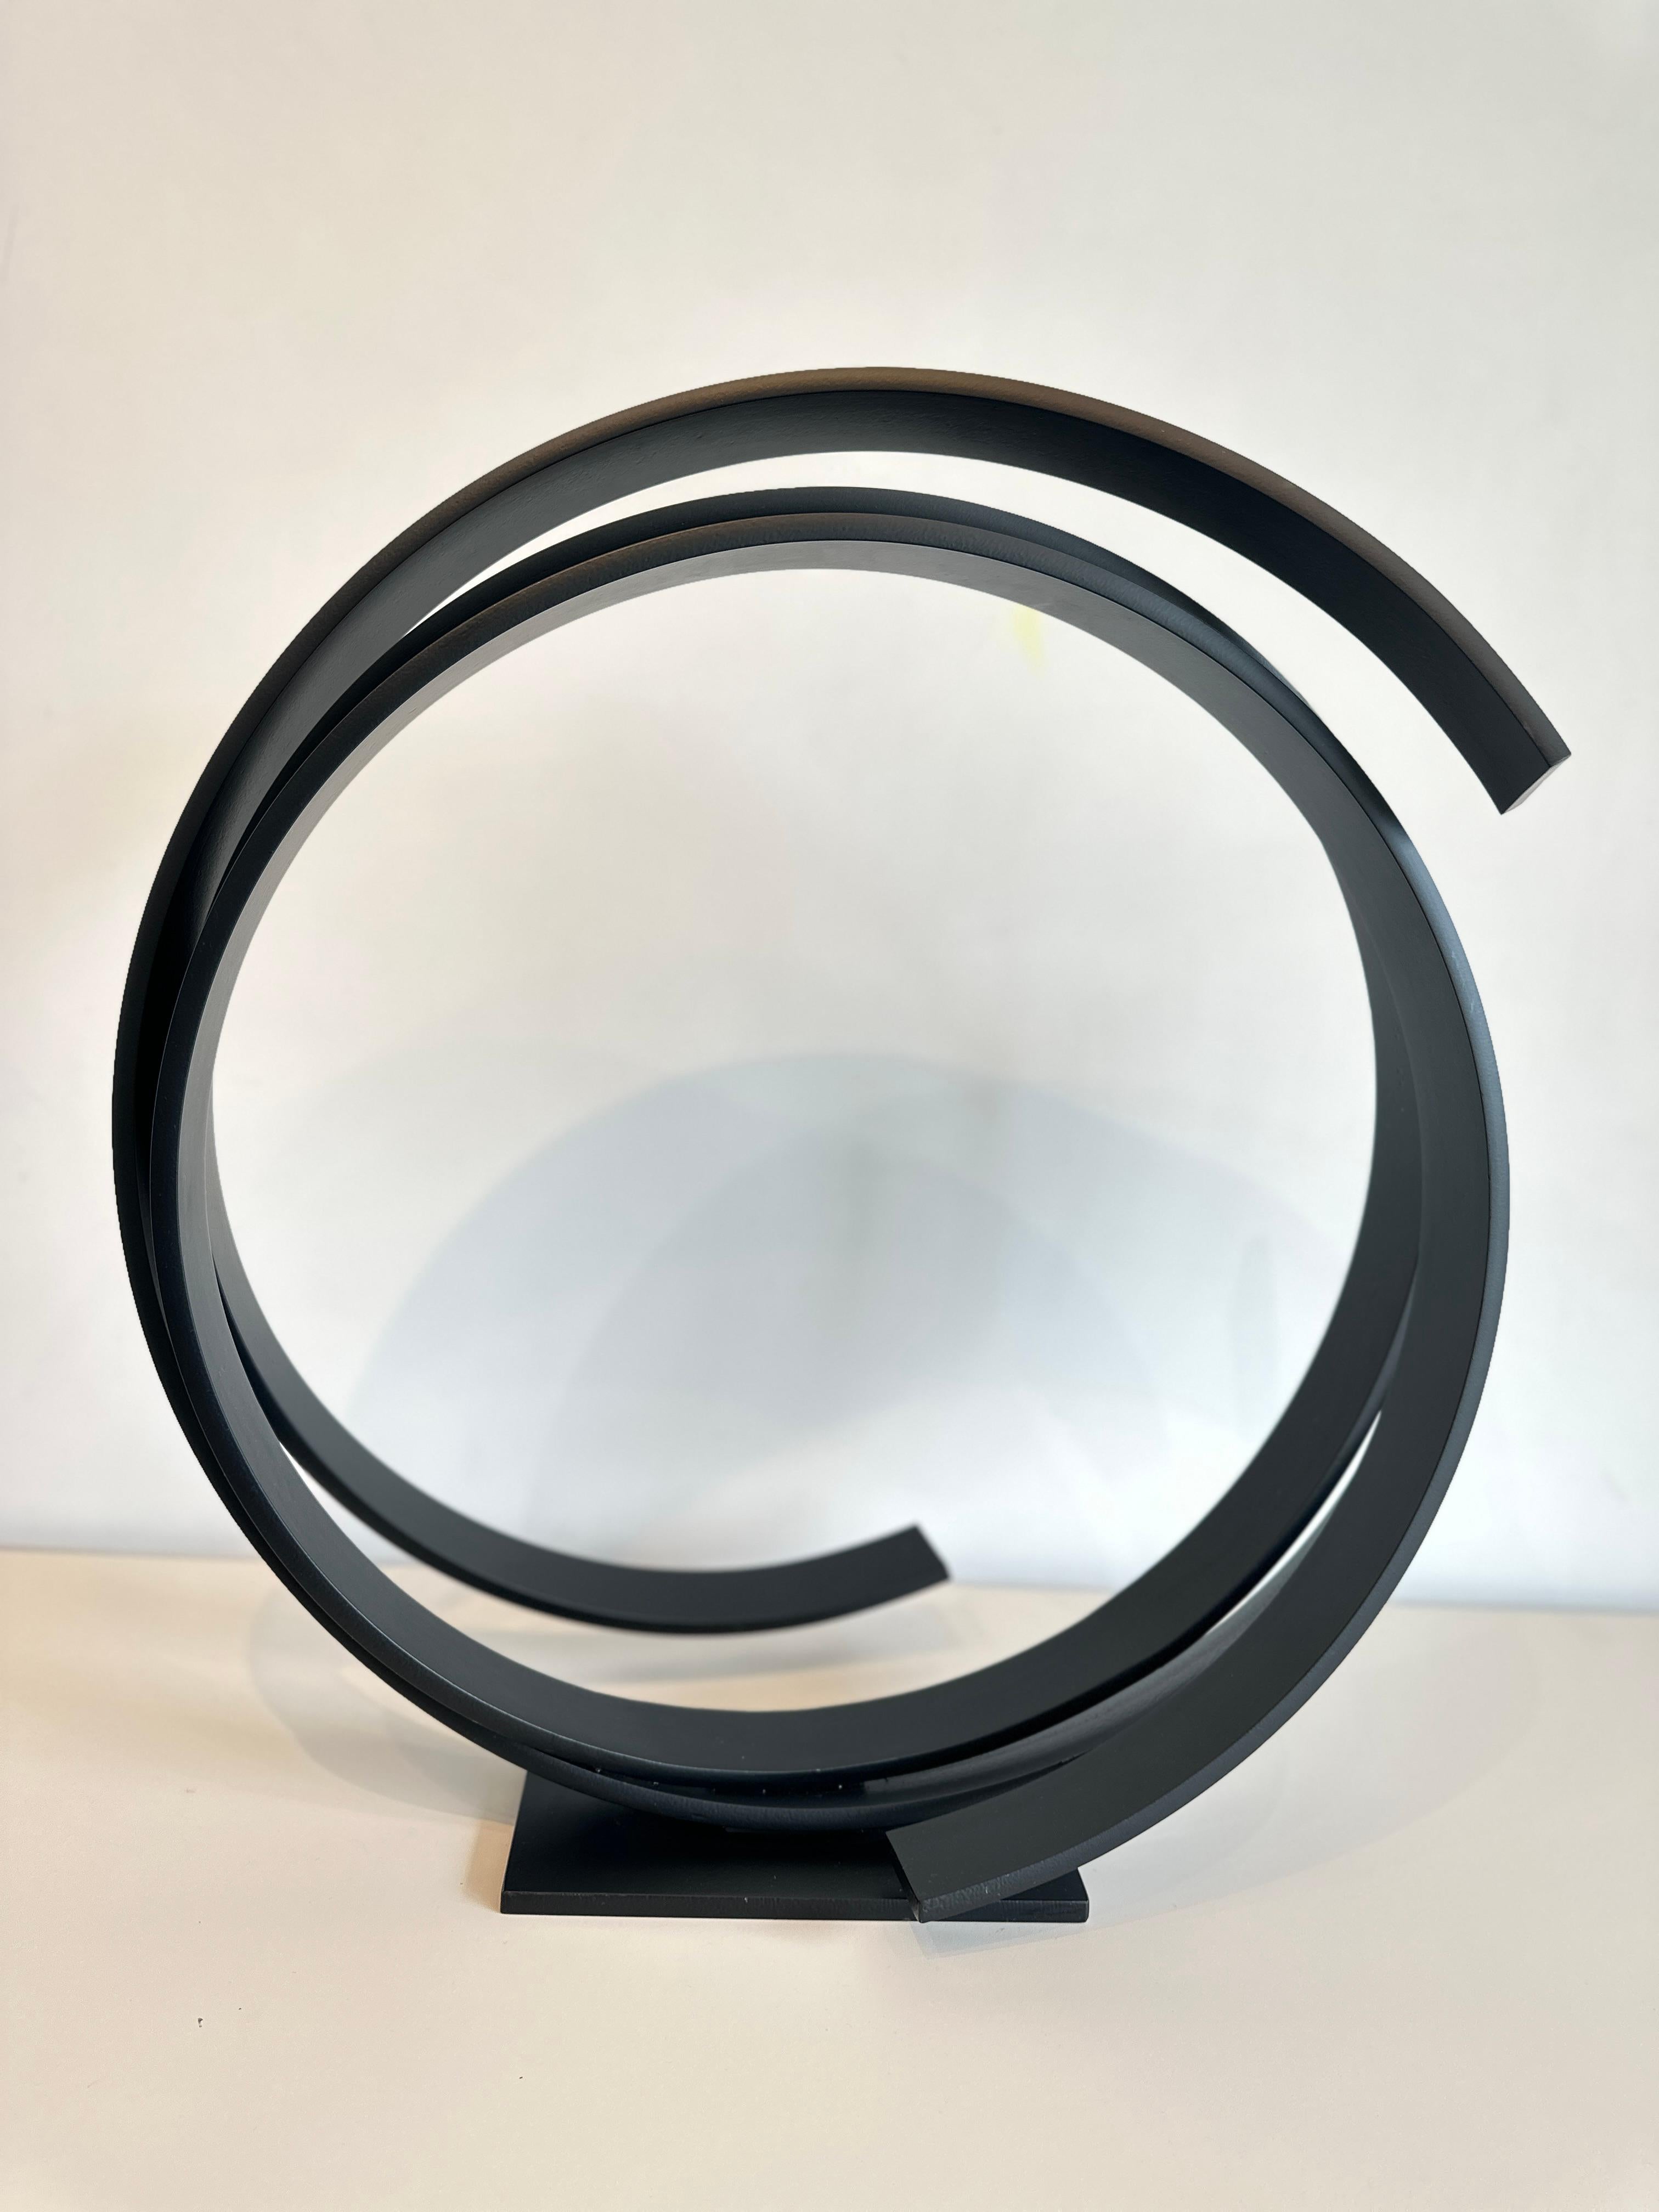 Black Orbit by Kuno Vollet - Large Contemporary Round Orbit sculpture  For Sale 7